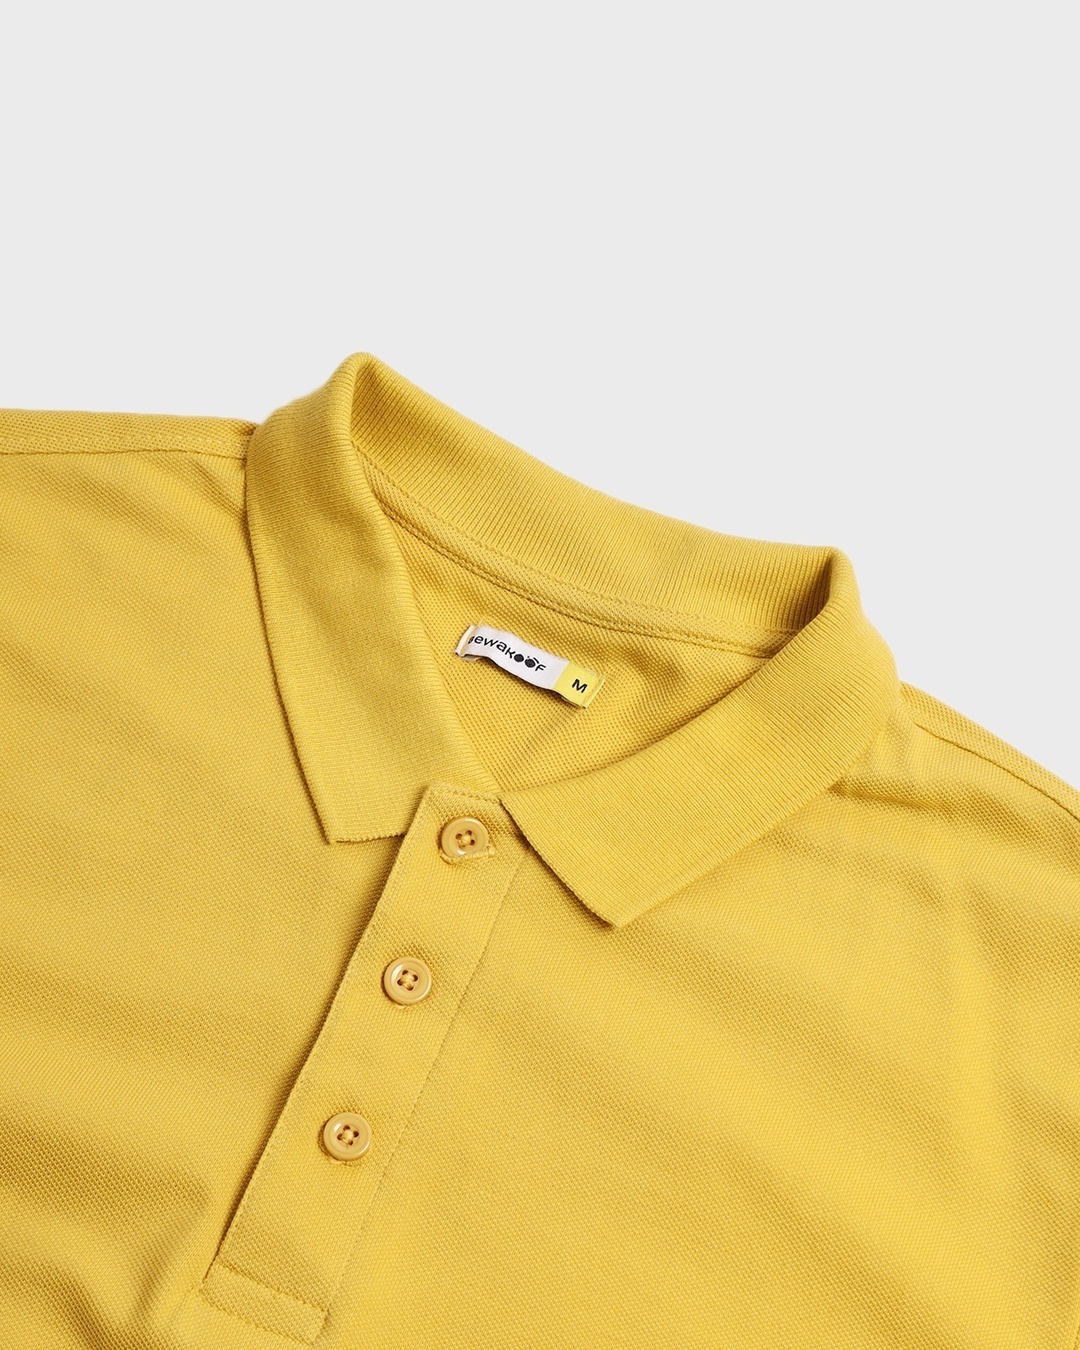 Buy Mustard Yellow Classic Polo for Men yellow Online at Bewakoof